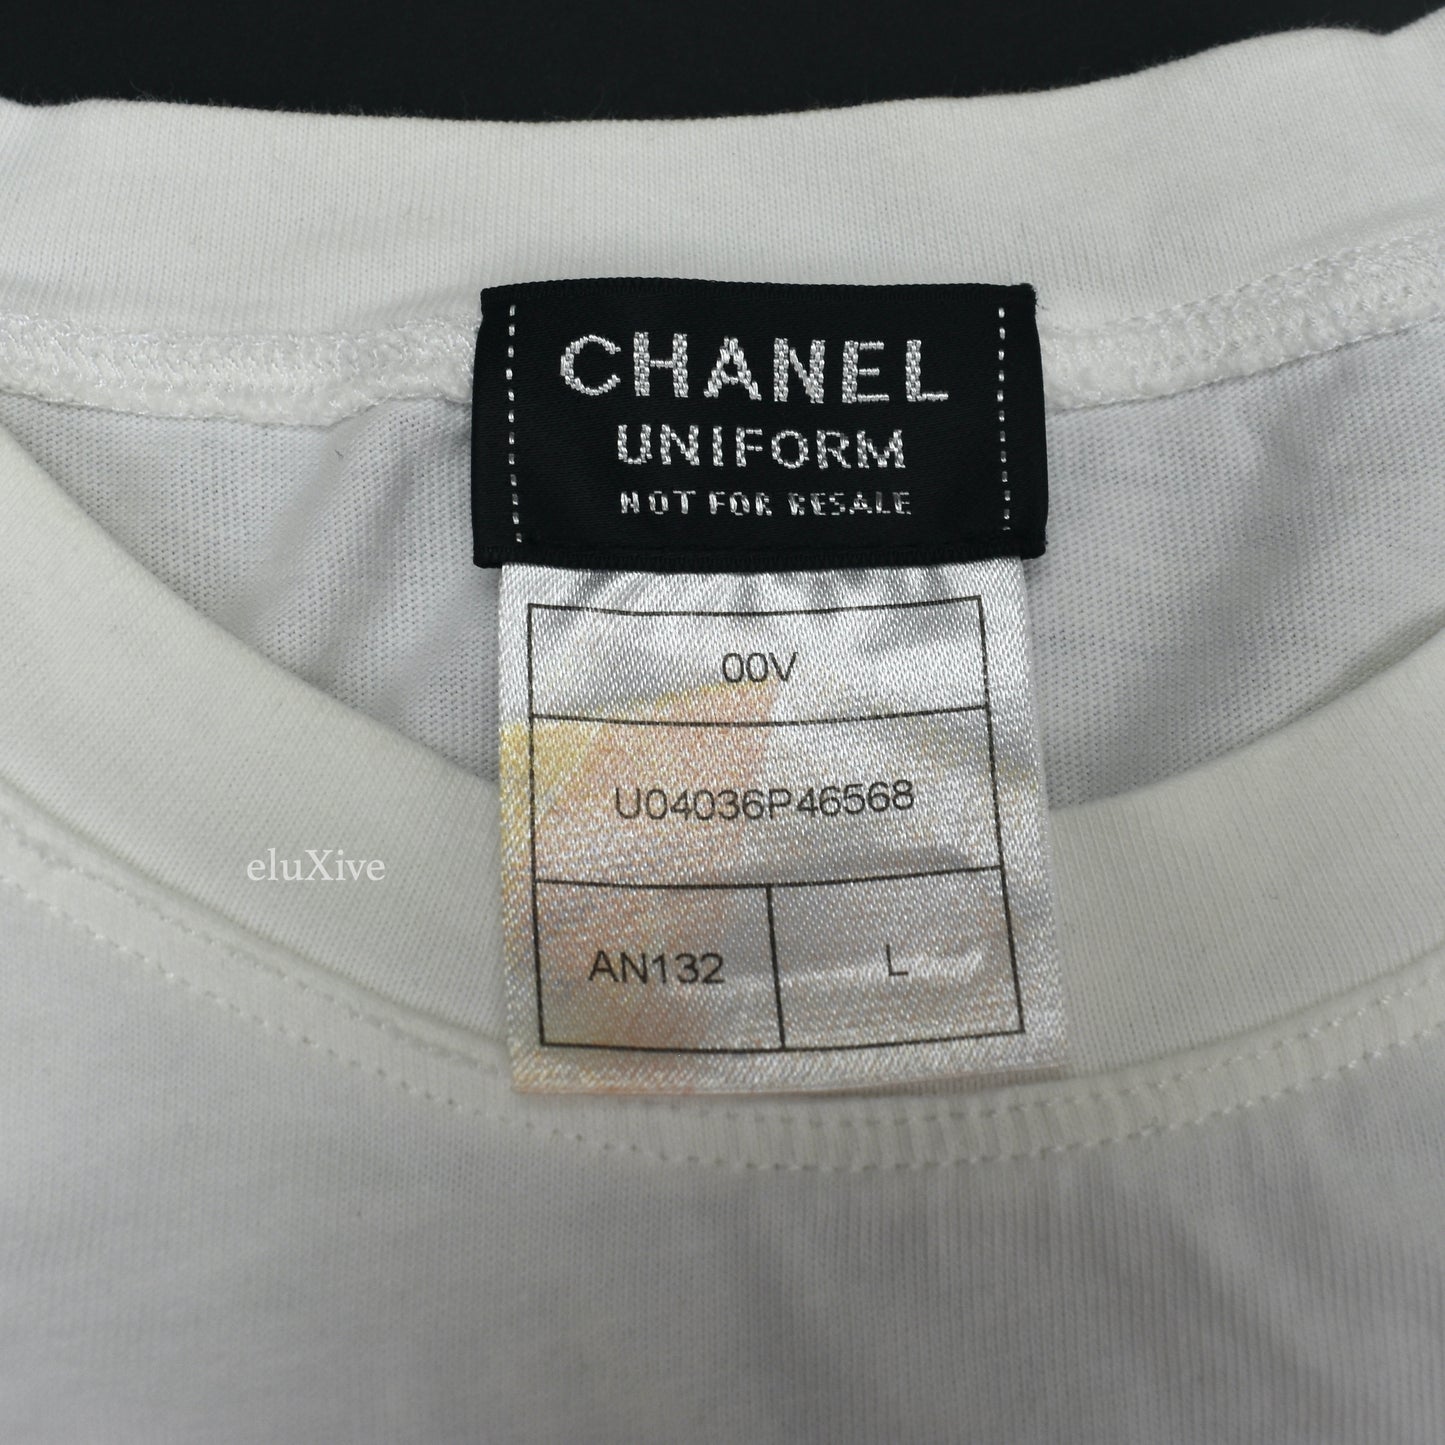 Chanel - White Velvet Logo L/S Crewneck Uniform T-Shirt